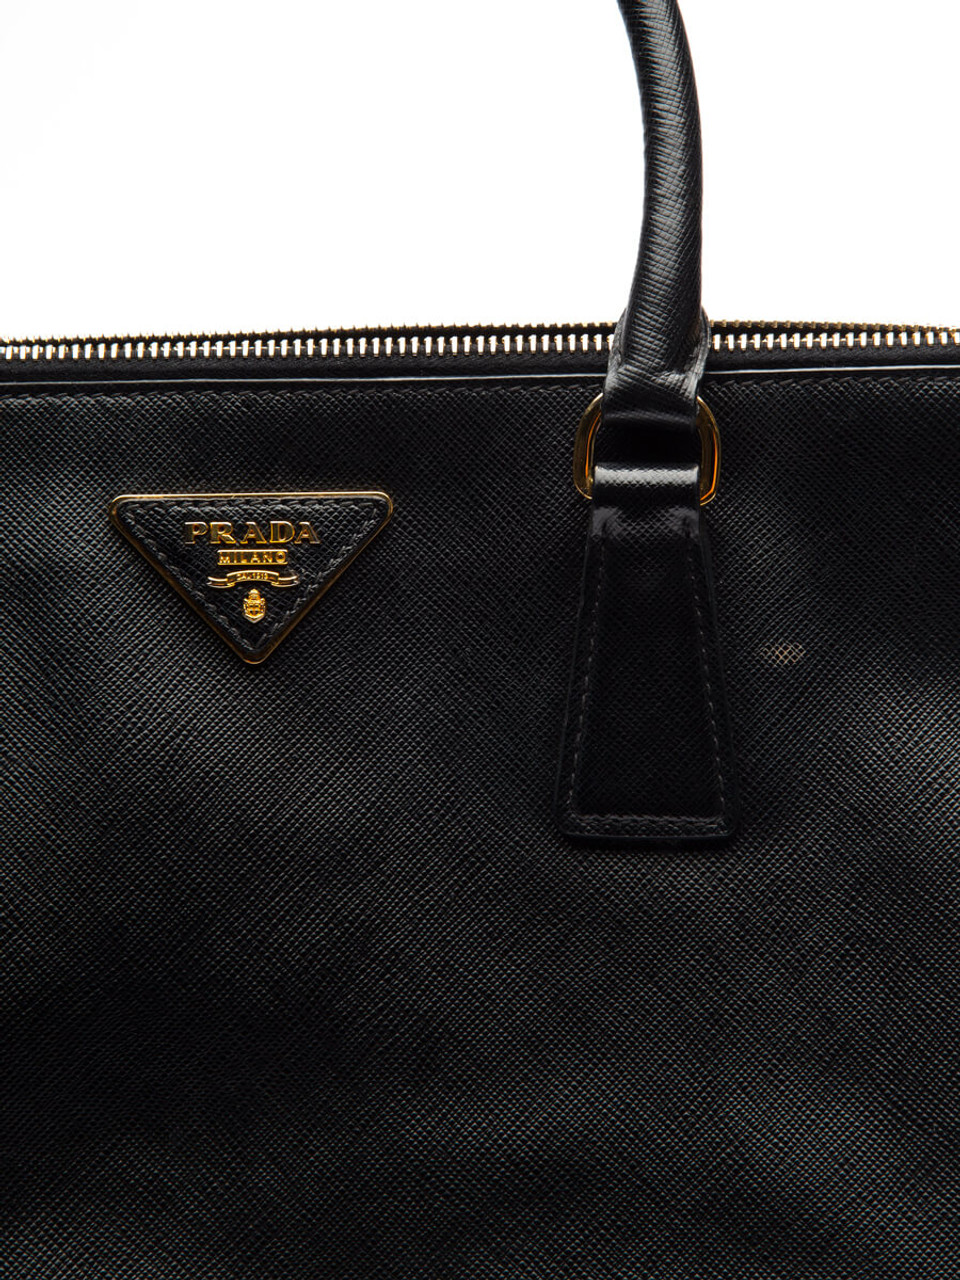 Prada Large Saffiano Lux Double Zip Womens Tote Handbag Black